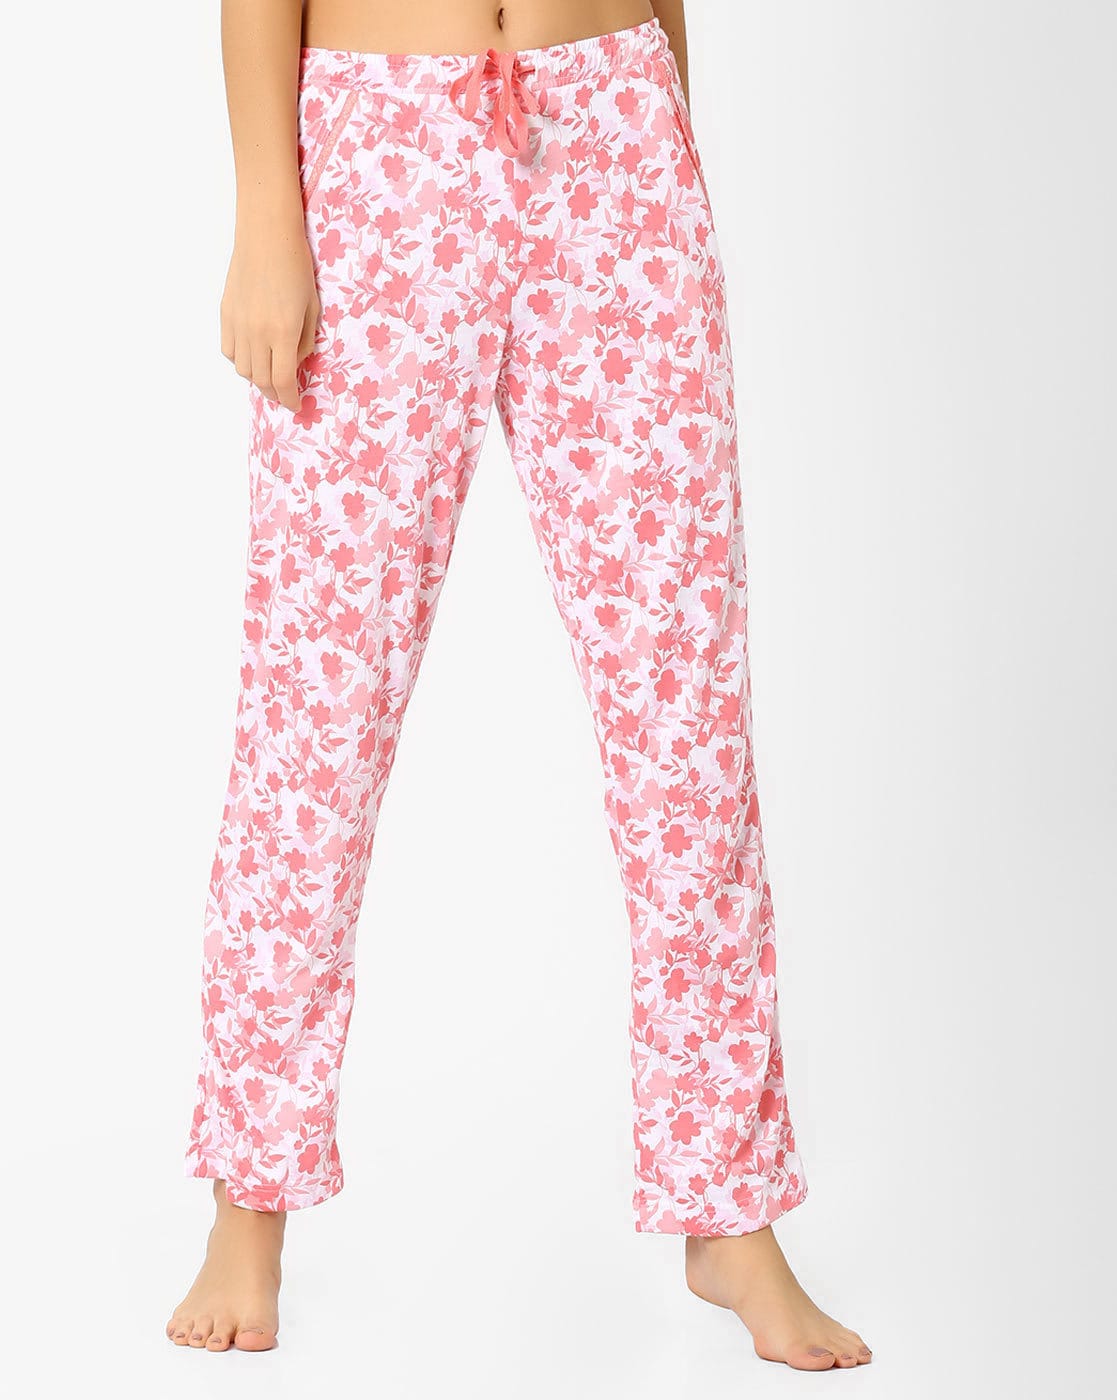 Buy Jockey Women's Straight Fit Pants (Ruby, Medium) Women's Pyjama Pants  (RX06_Banana Cream Assorted Checks_Medium_Banana Cream_Medium) at Amazon.in